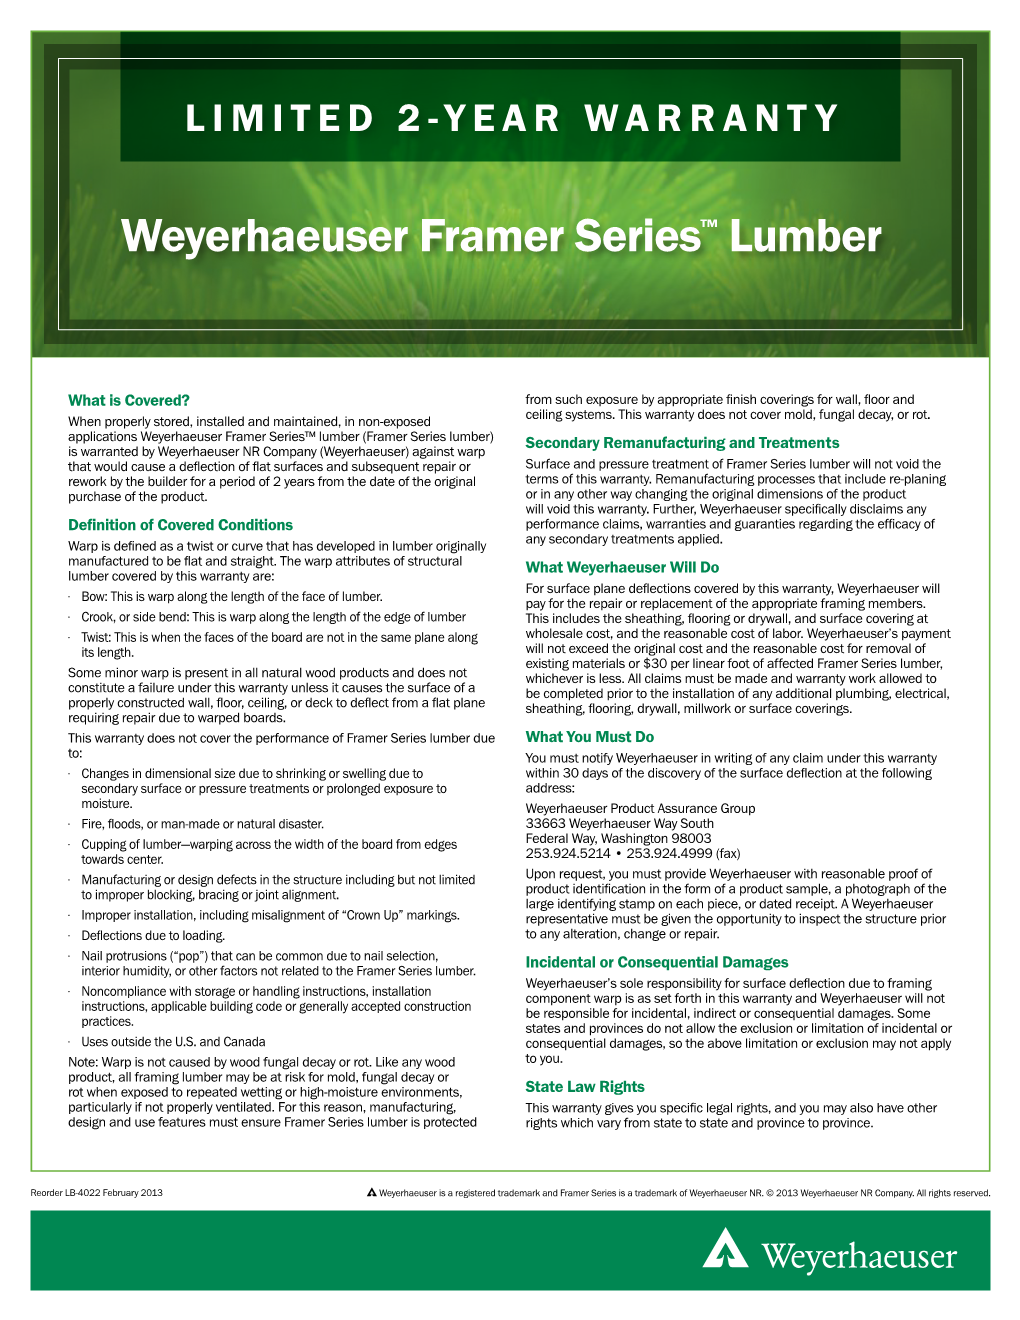 Weyerhaeuser Framer Series™ Lumber